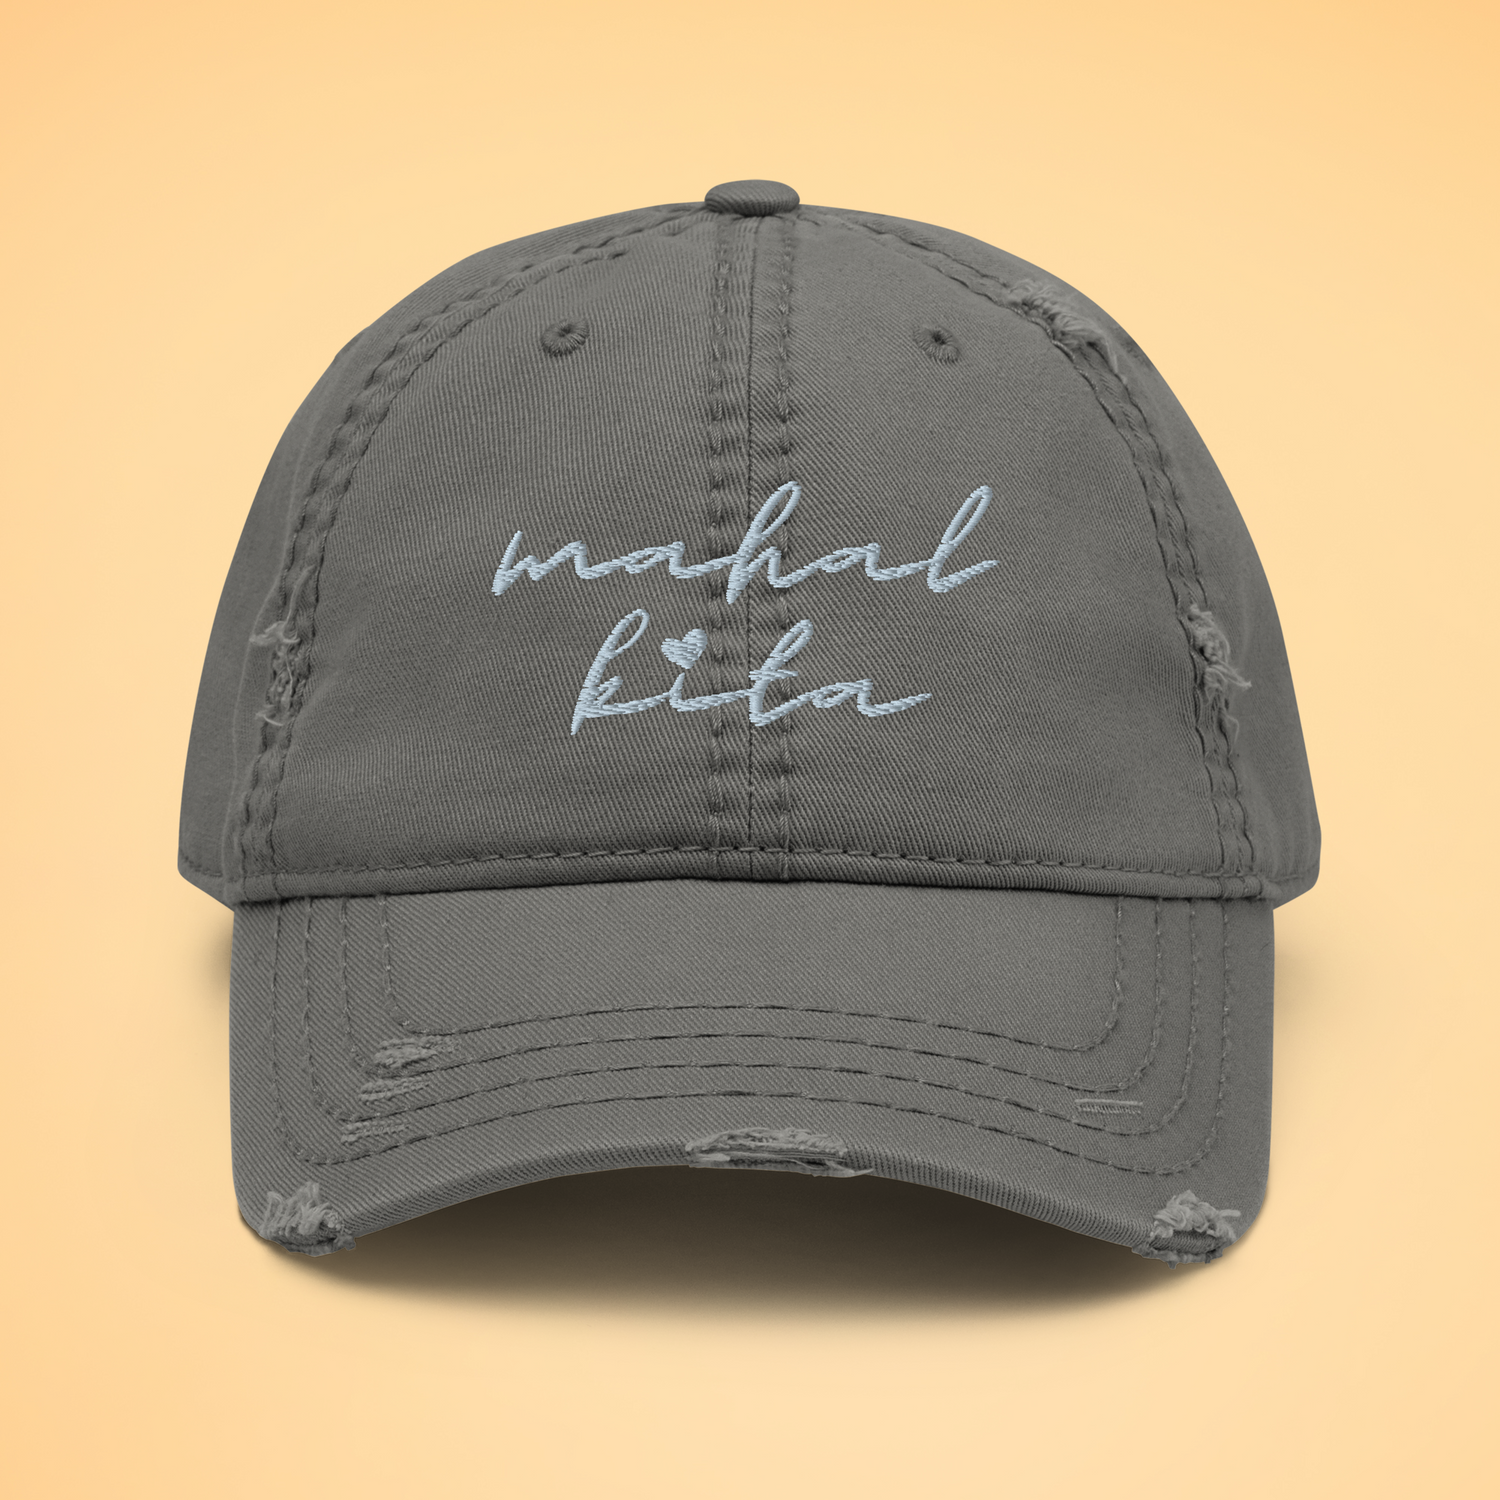 Mahal Kita Love You Filipino Language Embroidered Distressed Cap in Gray